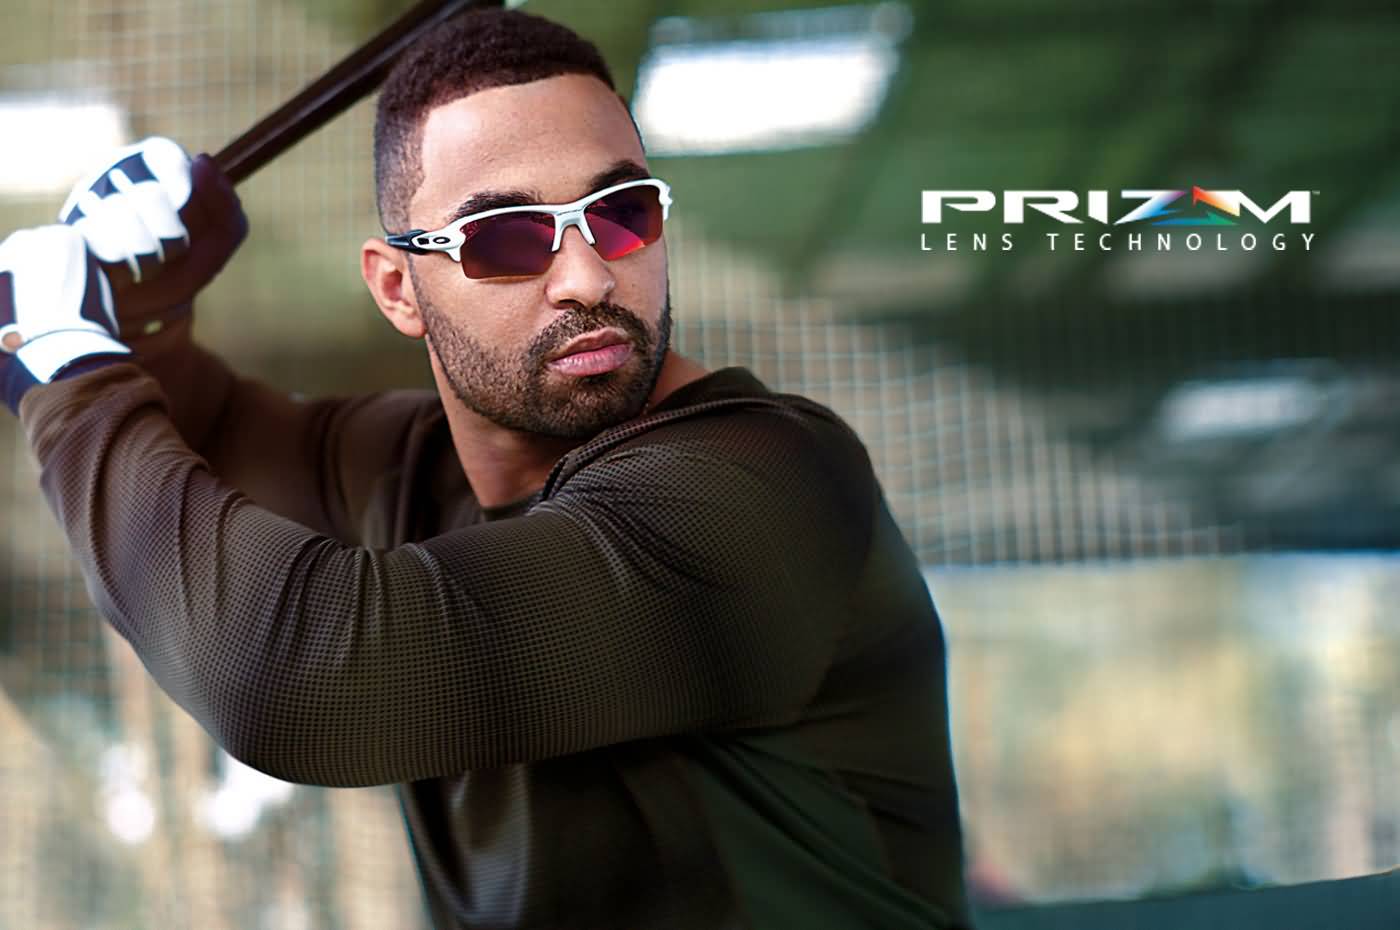 Oakley PRIZM technology - Lenses that revolutionize sport